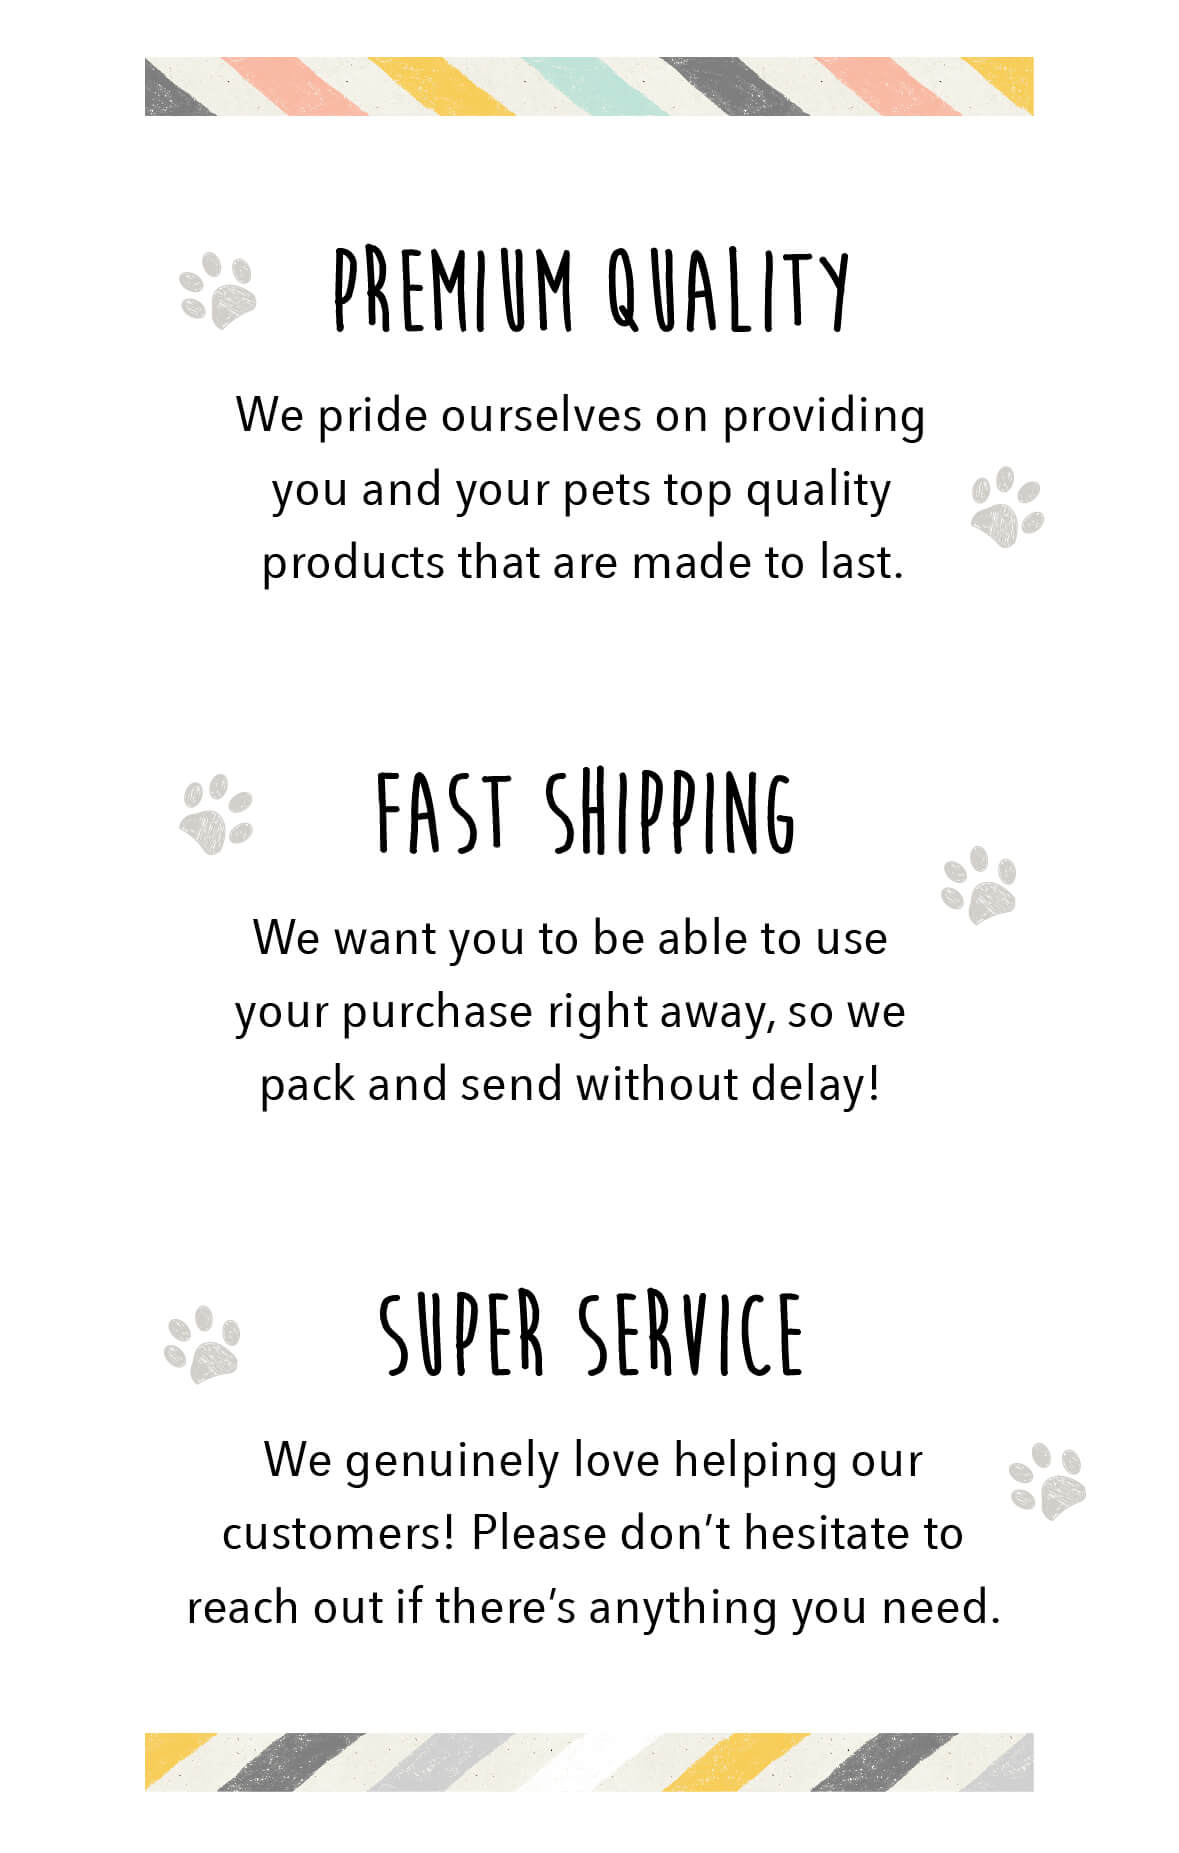 Pipco Pets Values - Premium Quality, Fast Shipping, Super Service